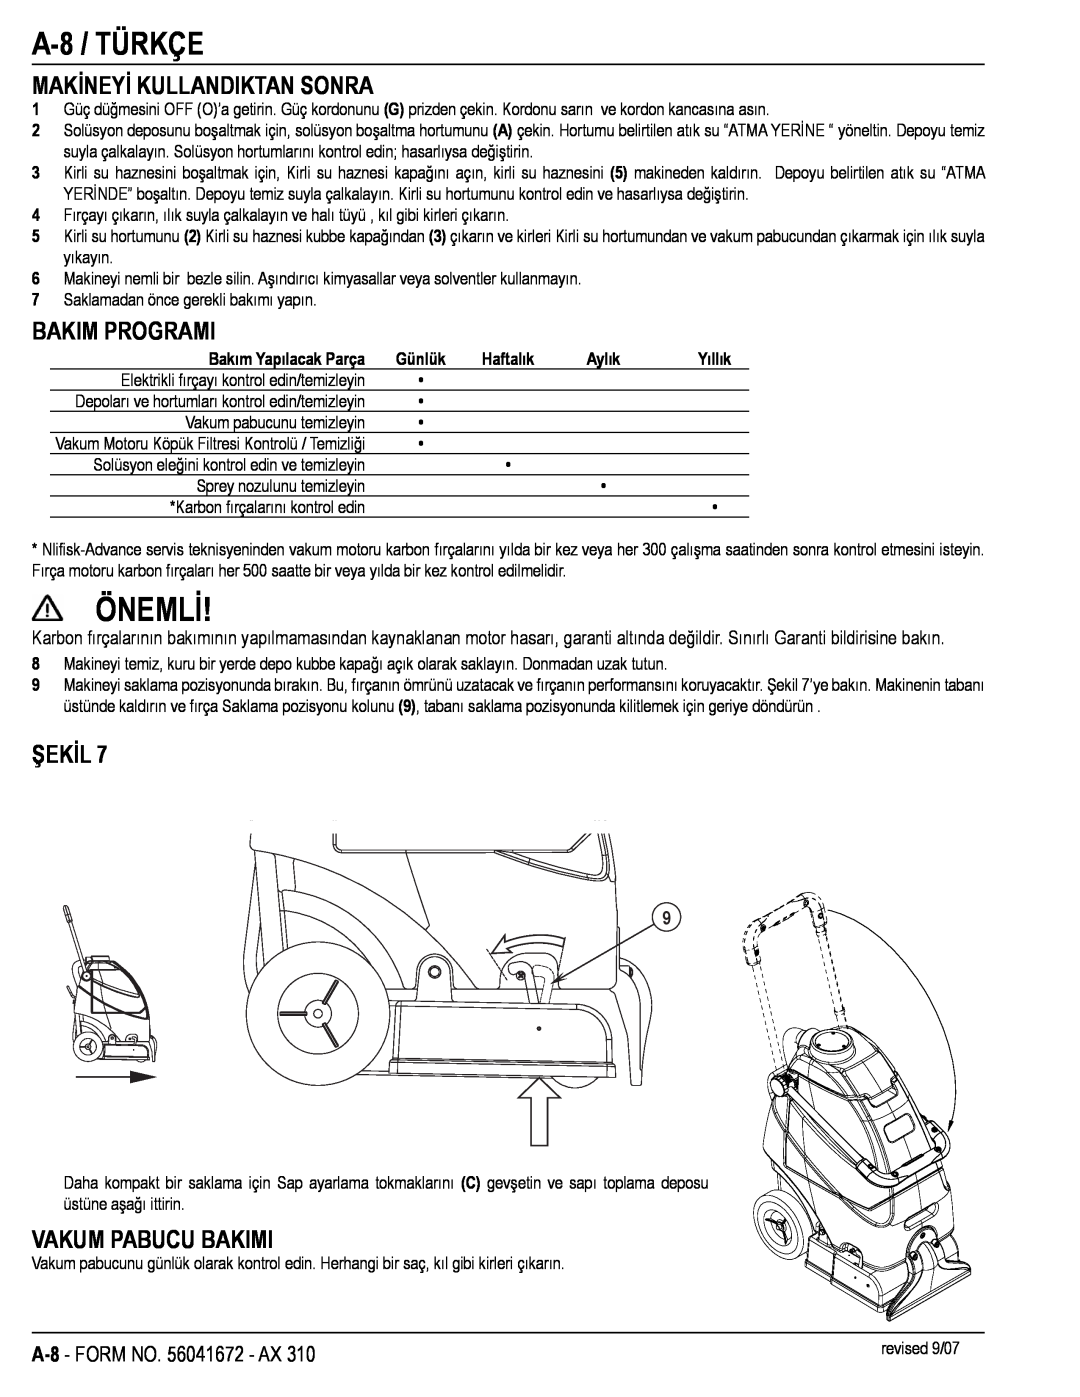 Nilfisk-Advance America AX 310 manual Önemli, A-8 /TÜRKÇE, Makineyi Kullandiktan Sonra, Bakim Programi, Vakum Pabucu Bakimi 